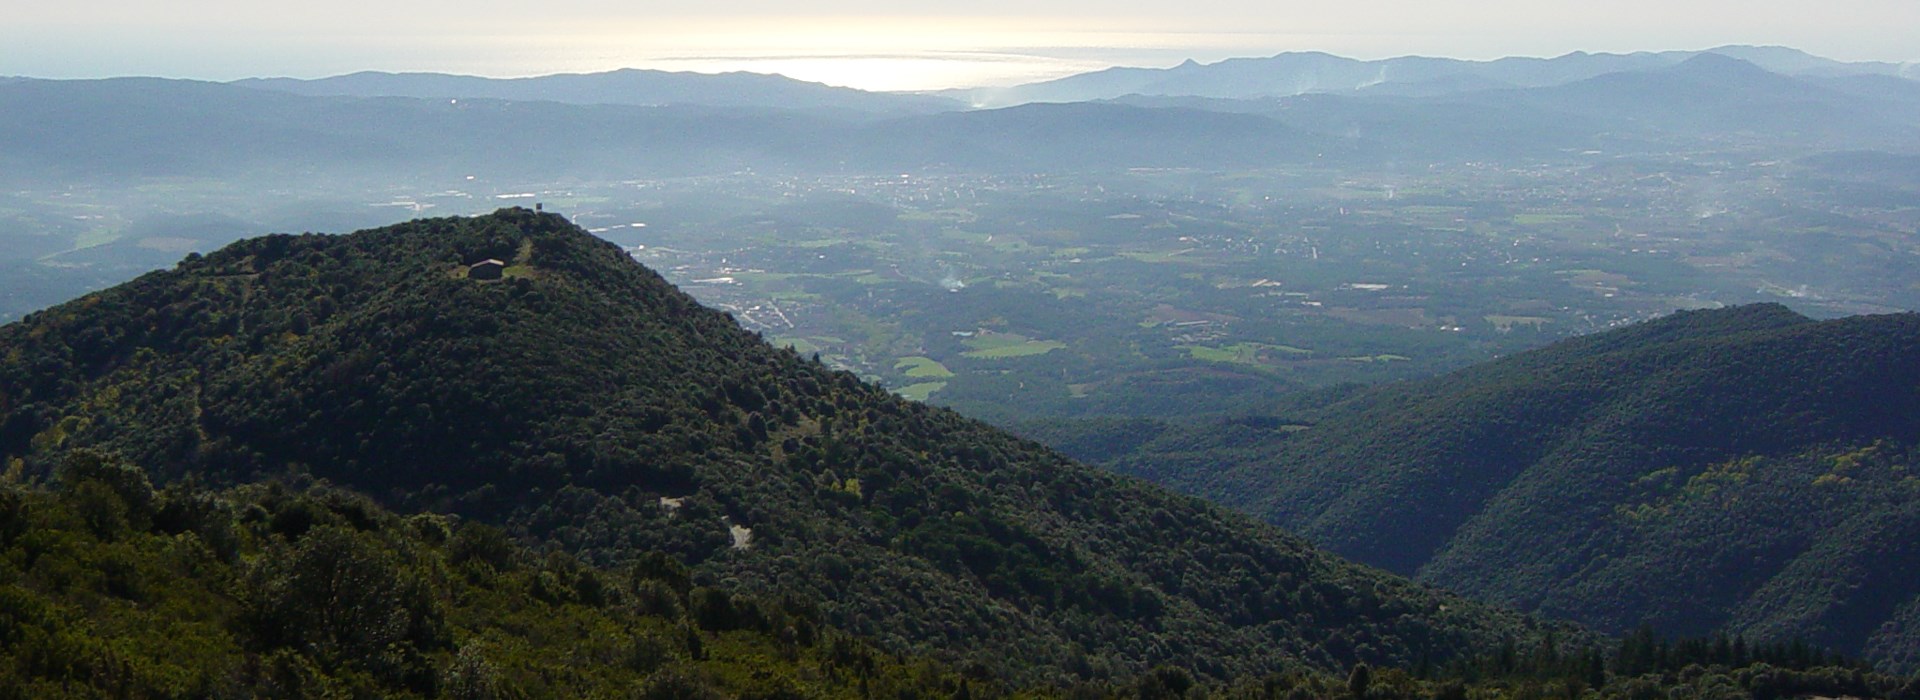 Visiter Le massif du Montseny - Espagne